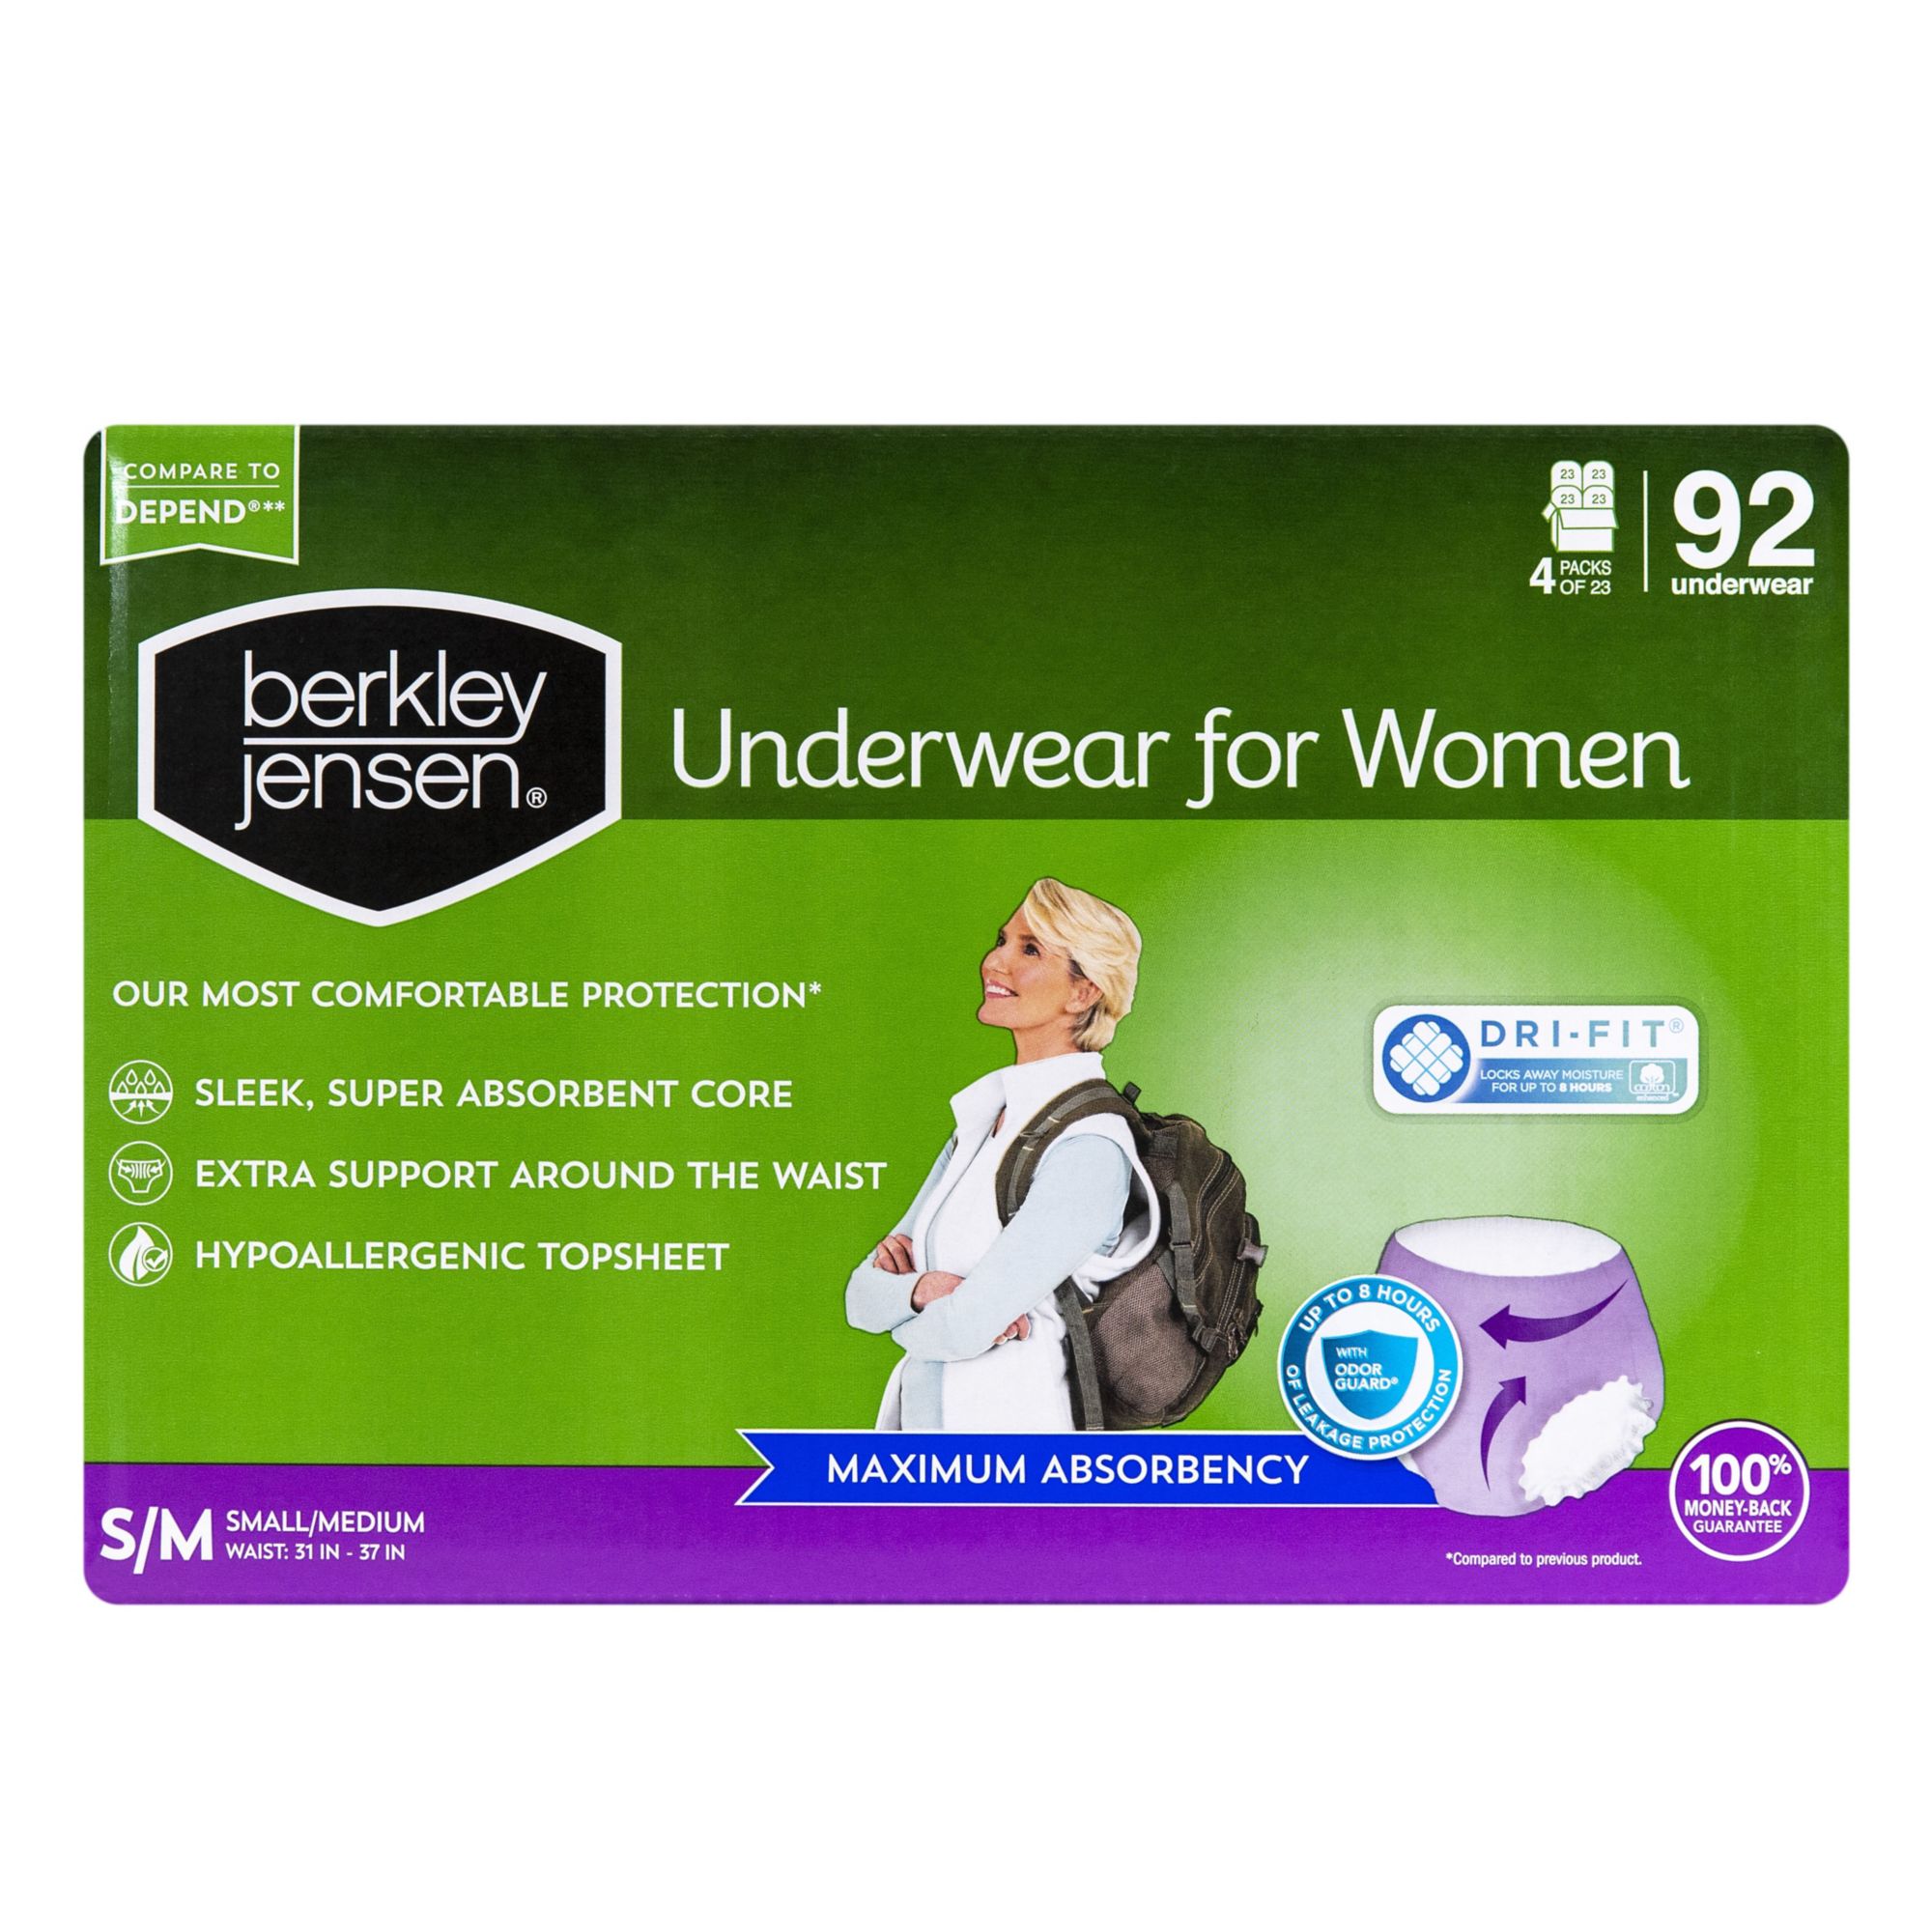 Berkley Jensen Incontinence and Post Partum Underwear for Women, Size Small/ Medium, 92 ct.